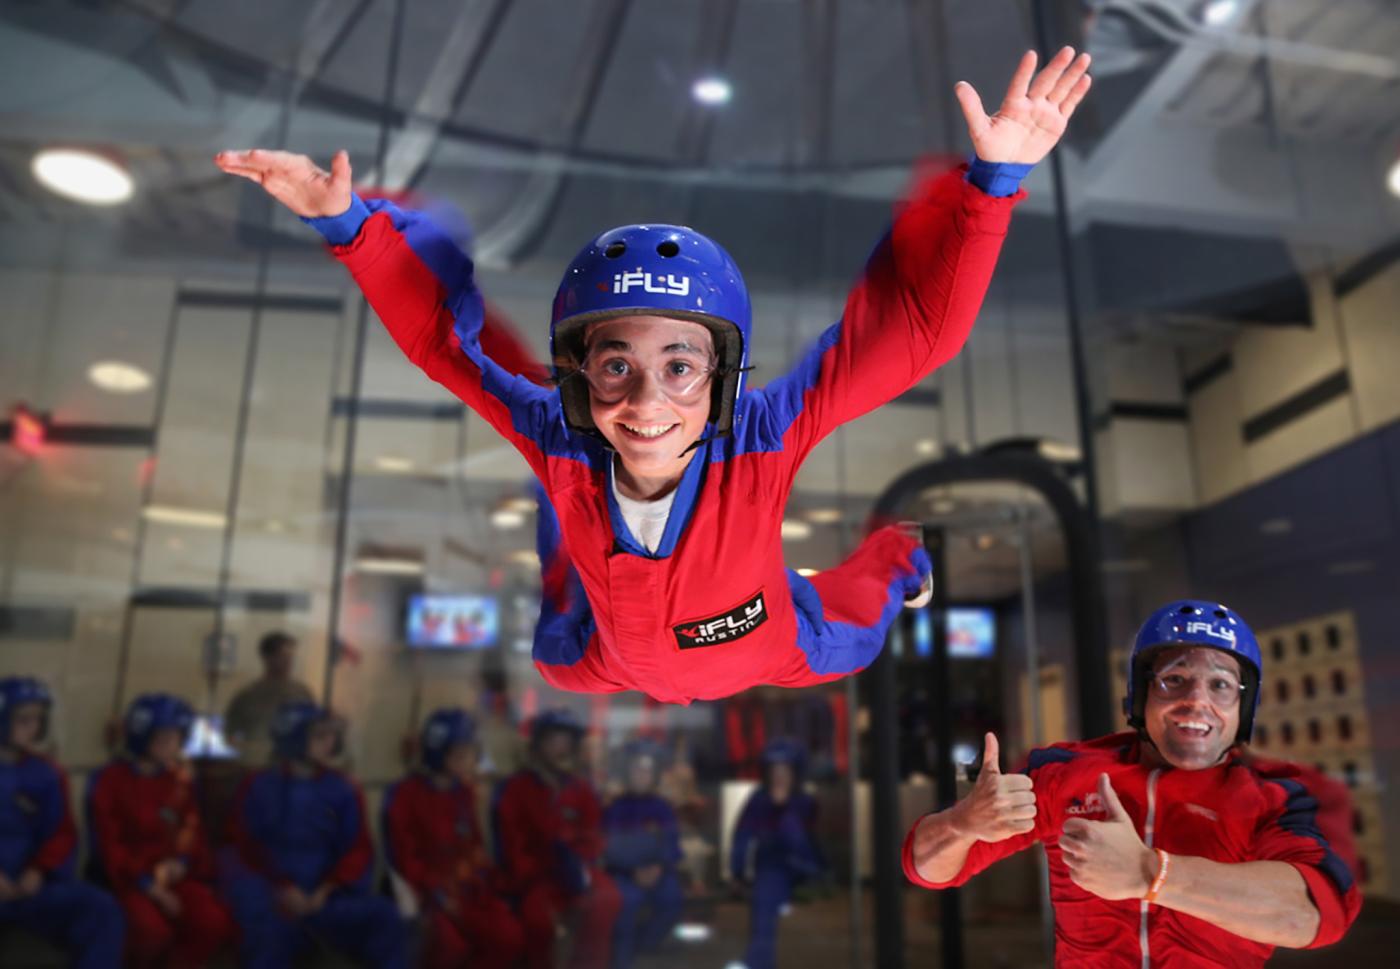 Kids fun at iFly indoor skydiving